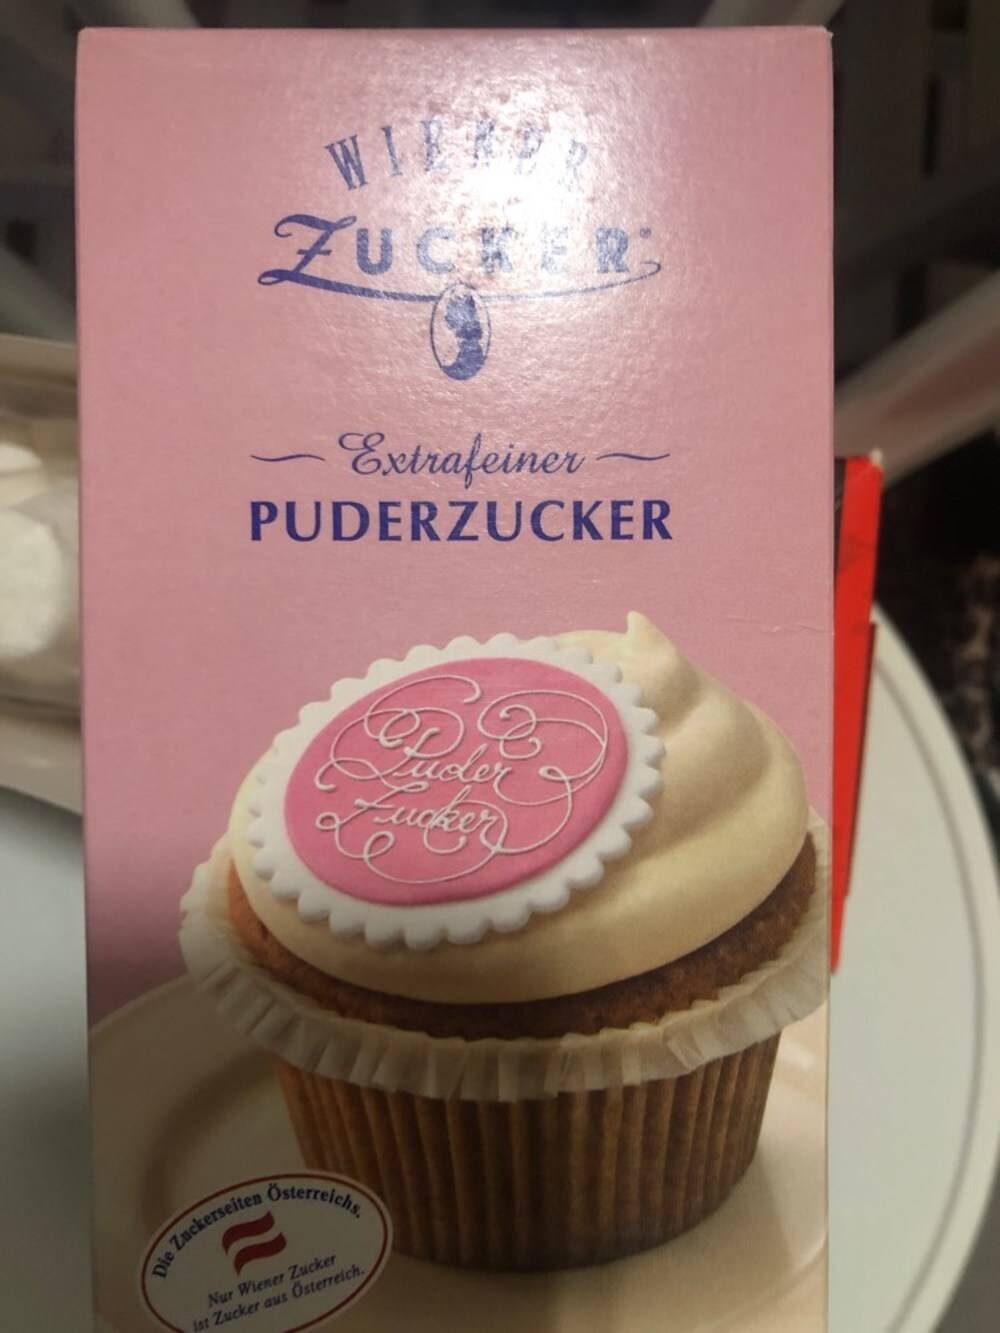 Puderzucker extrafein - Product